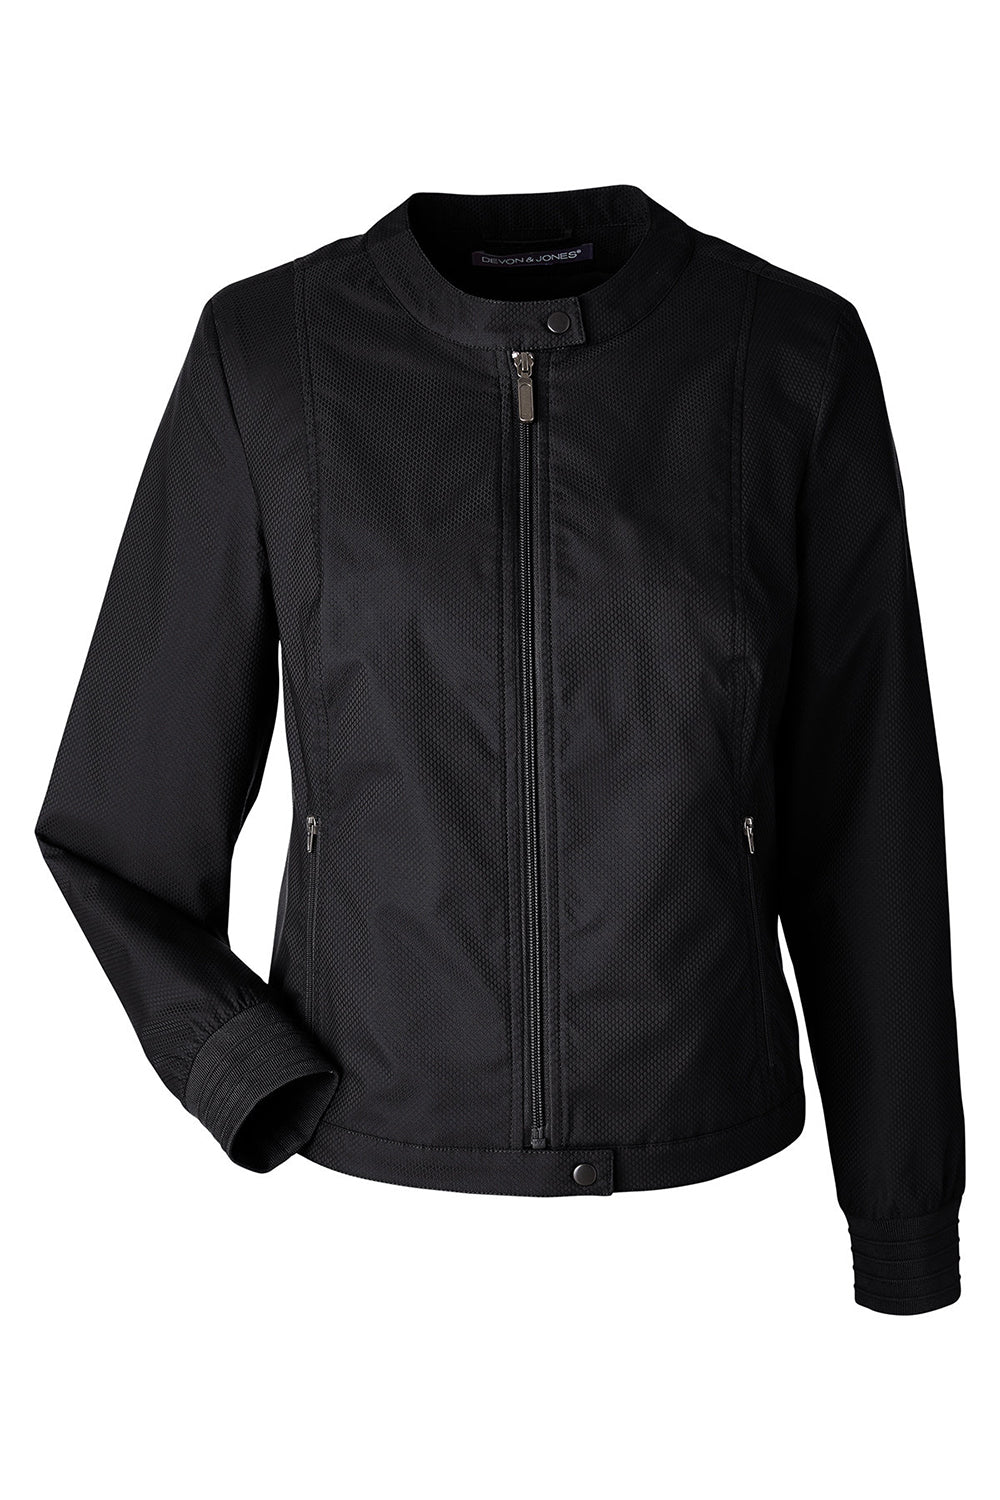 Devon & Jones DG700W Womens Vision Club Full Zip Jacket Black Flat Front